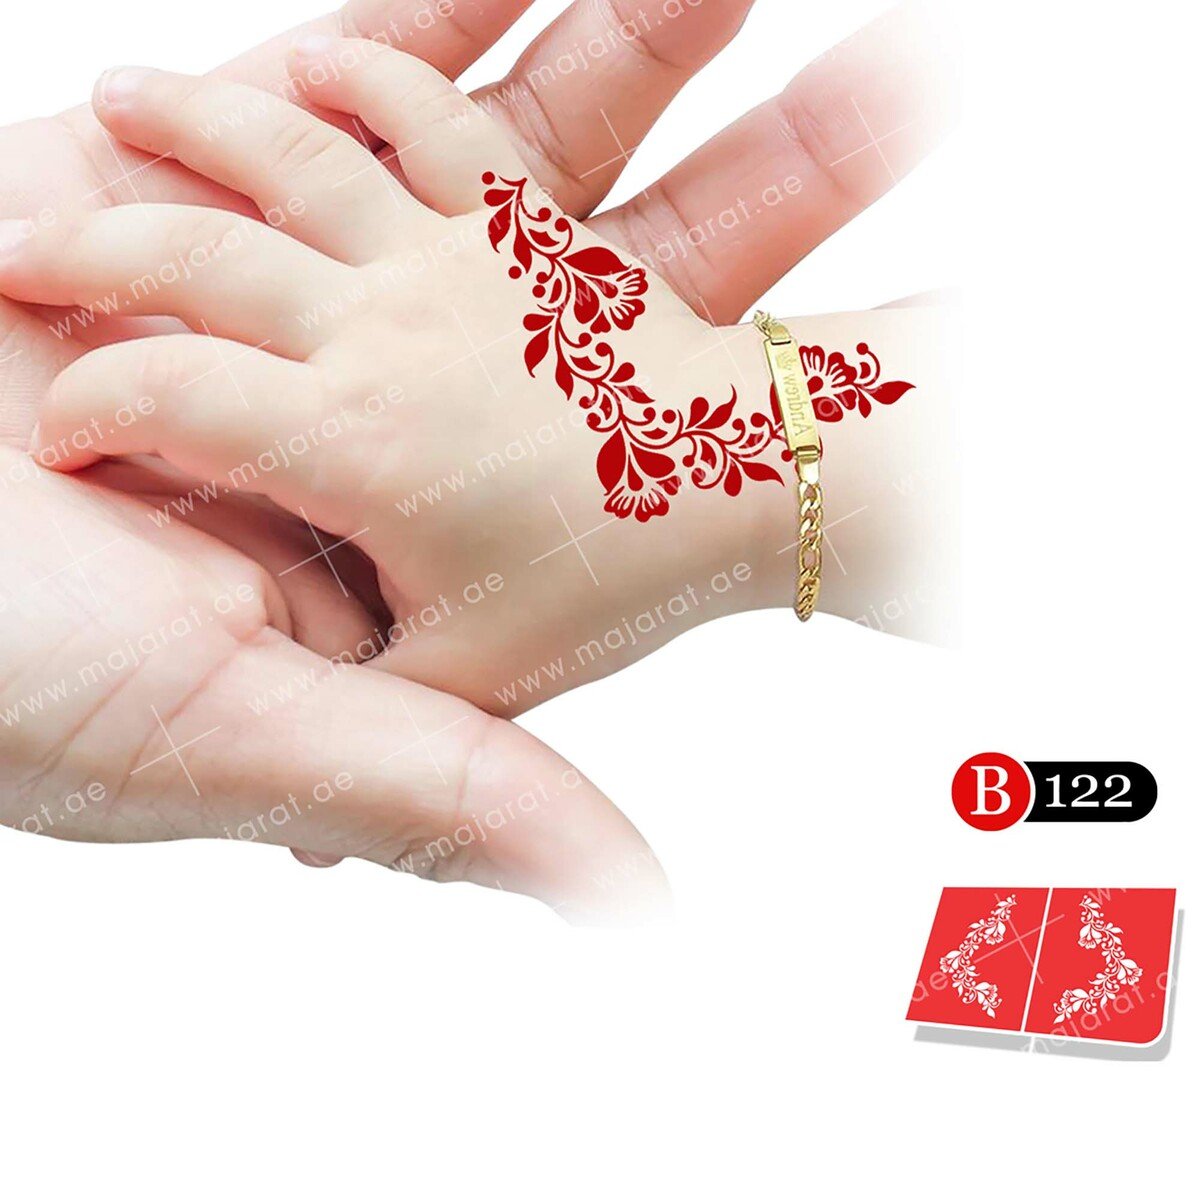 Majarat Henna Design Sticker Baby B122 15x10cm